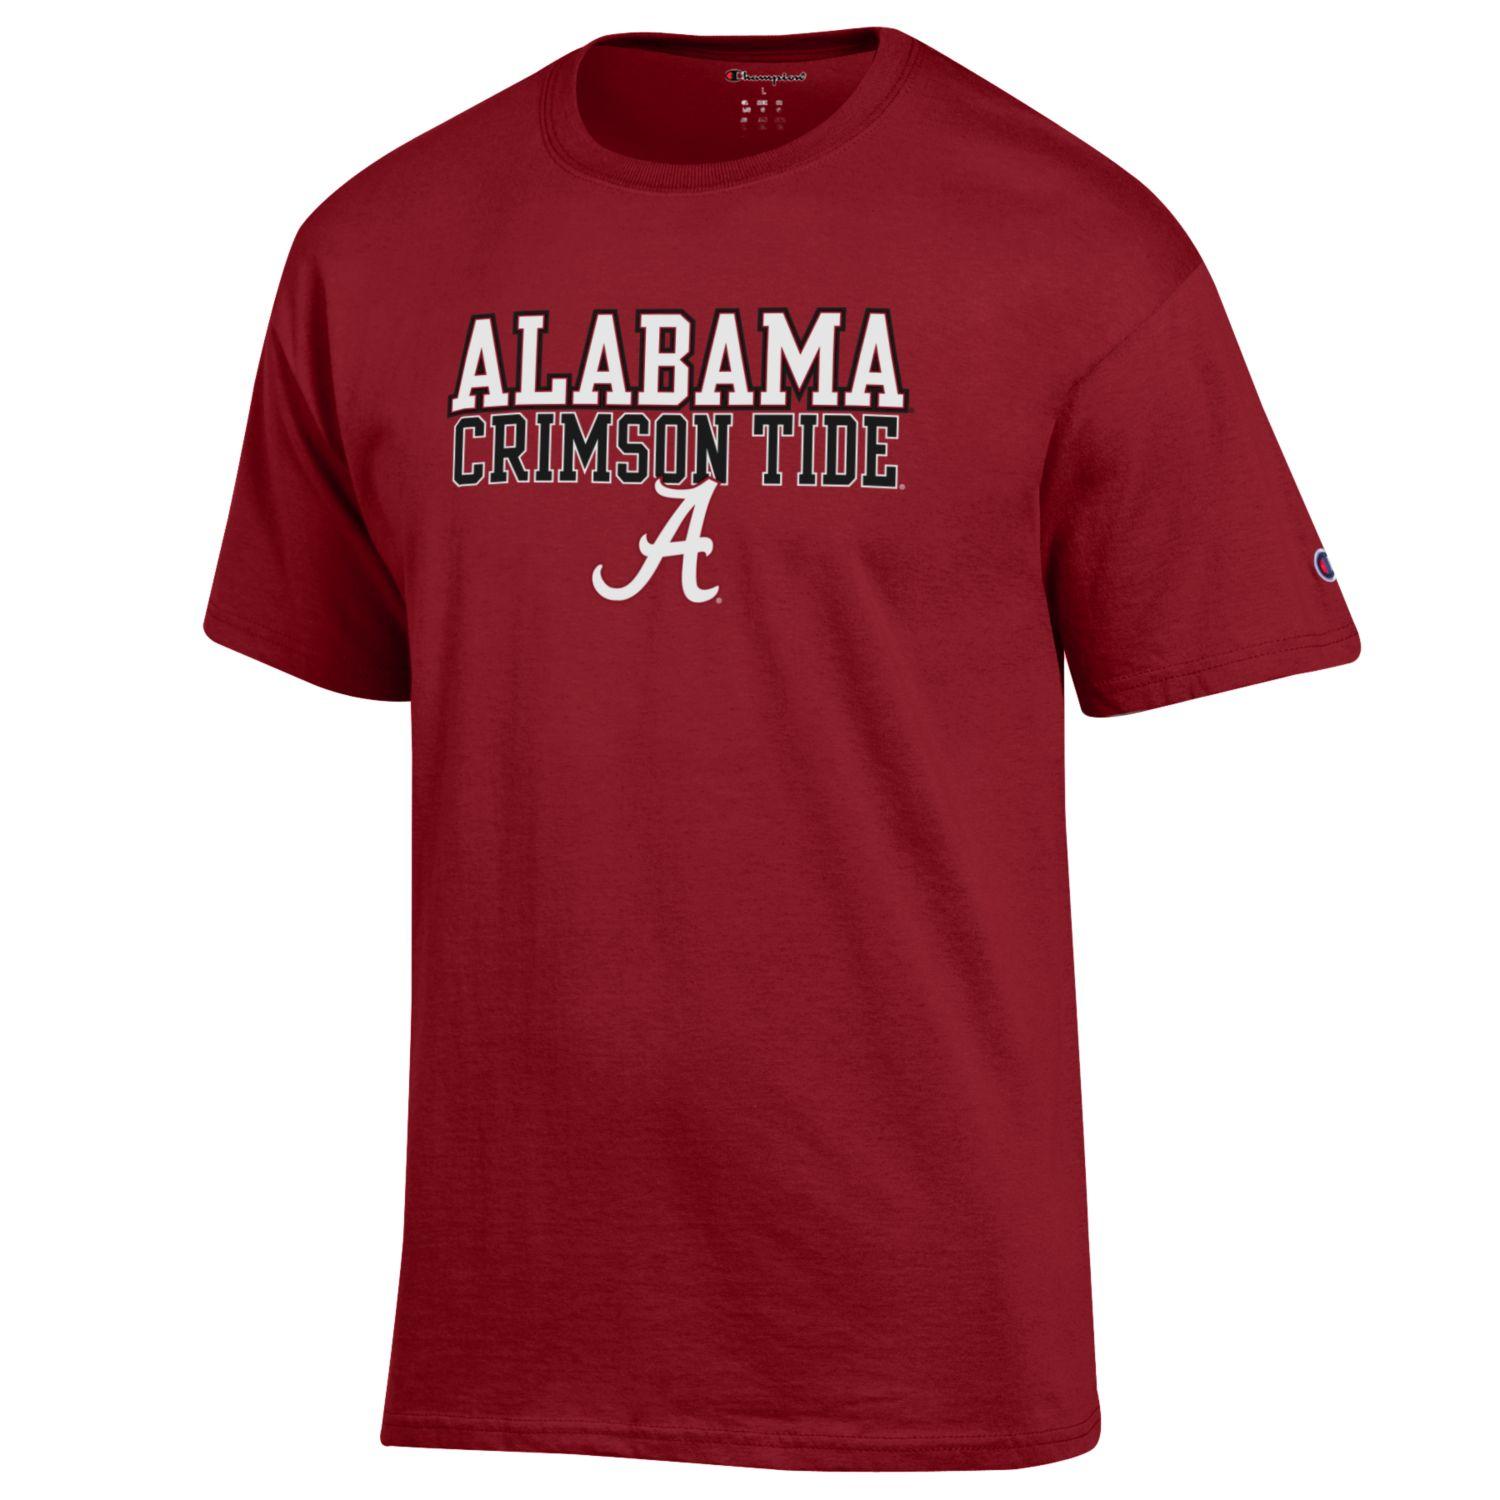 Alabama Crimson Tide T Shirts | Alabama Collegiate Apparel